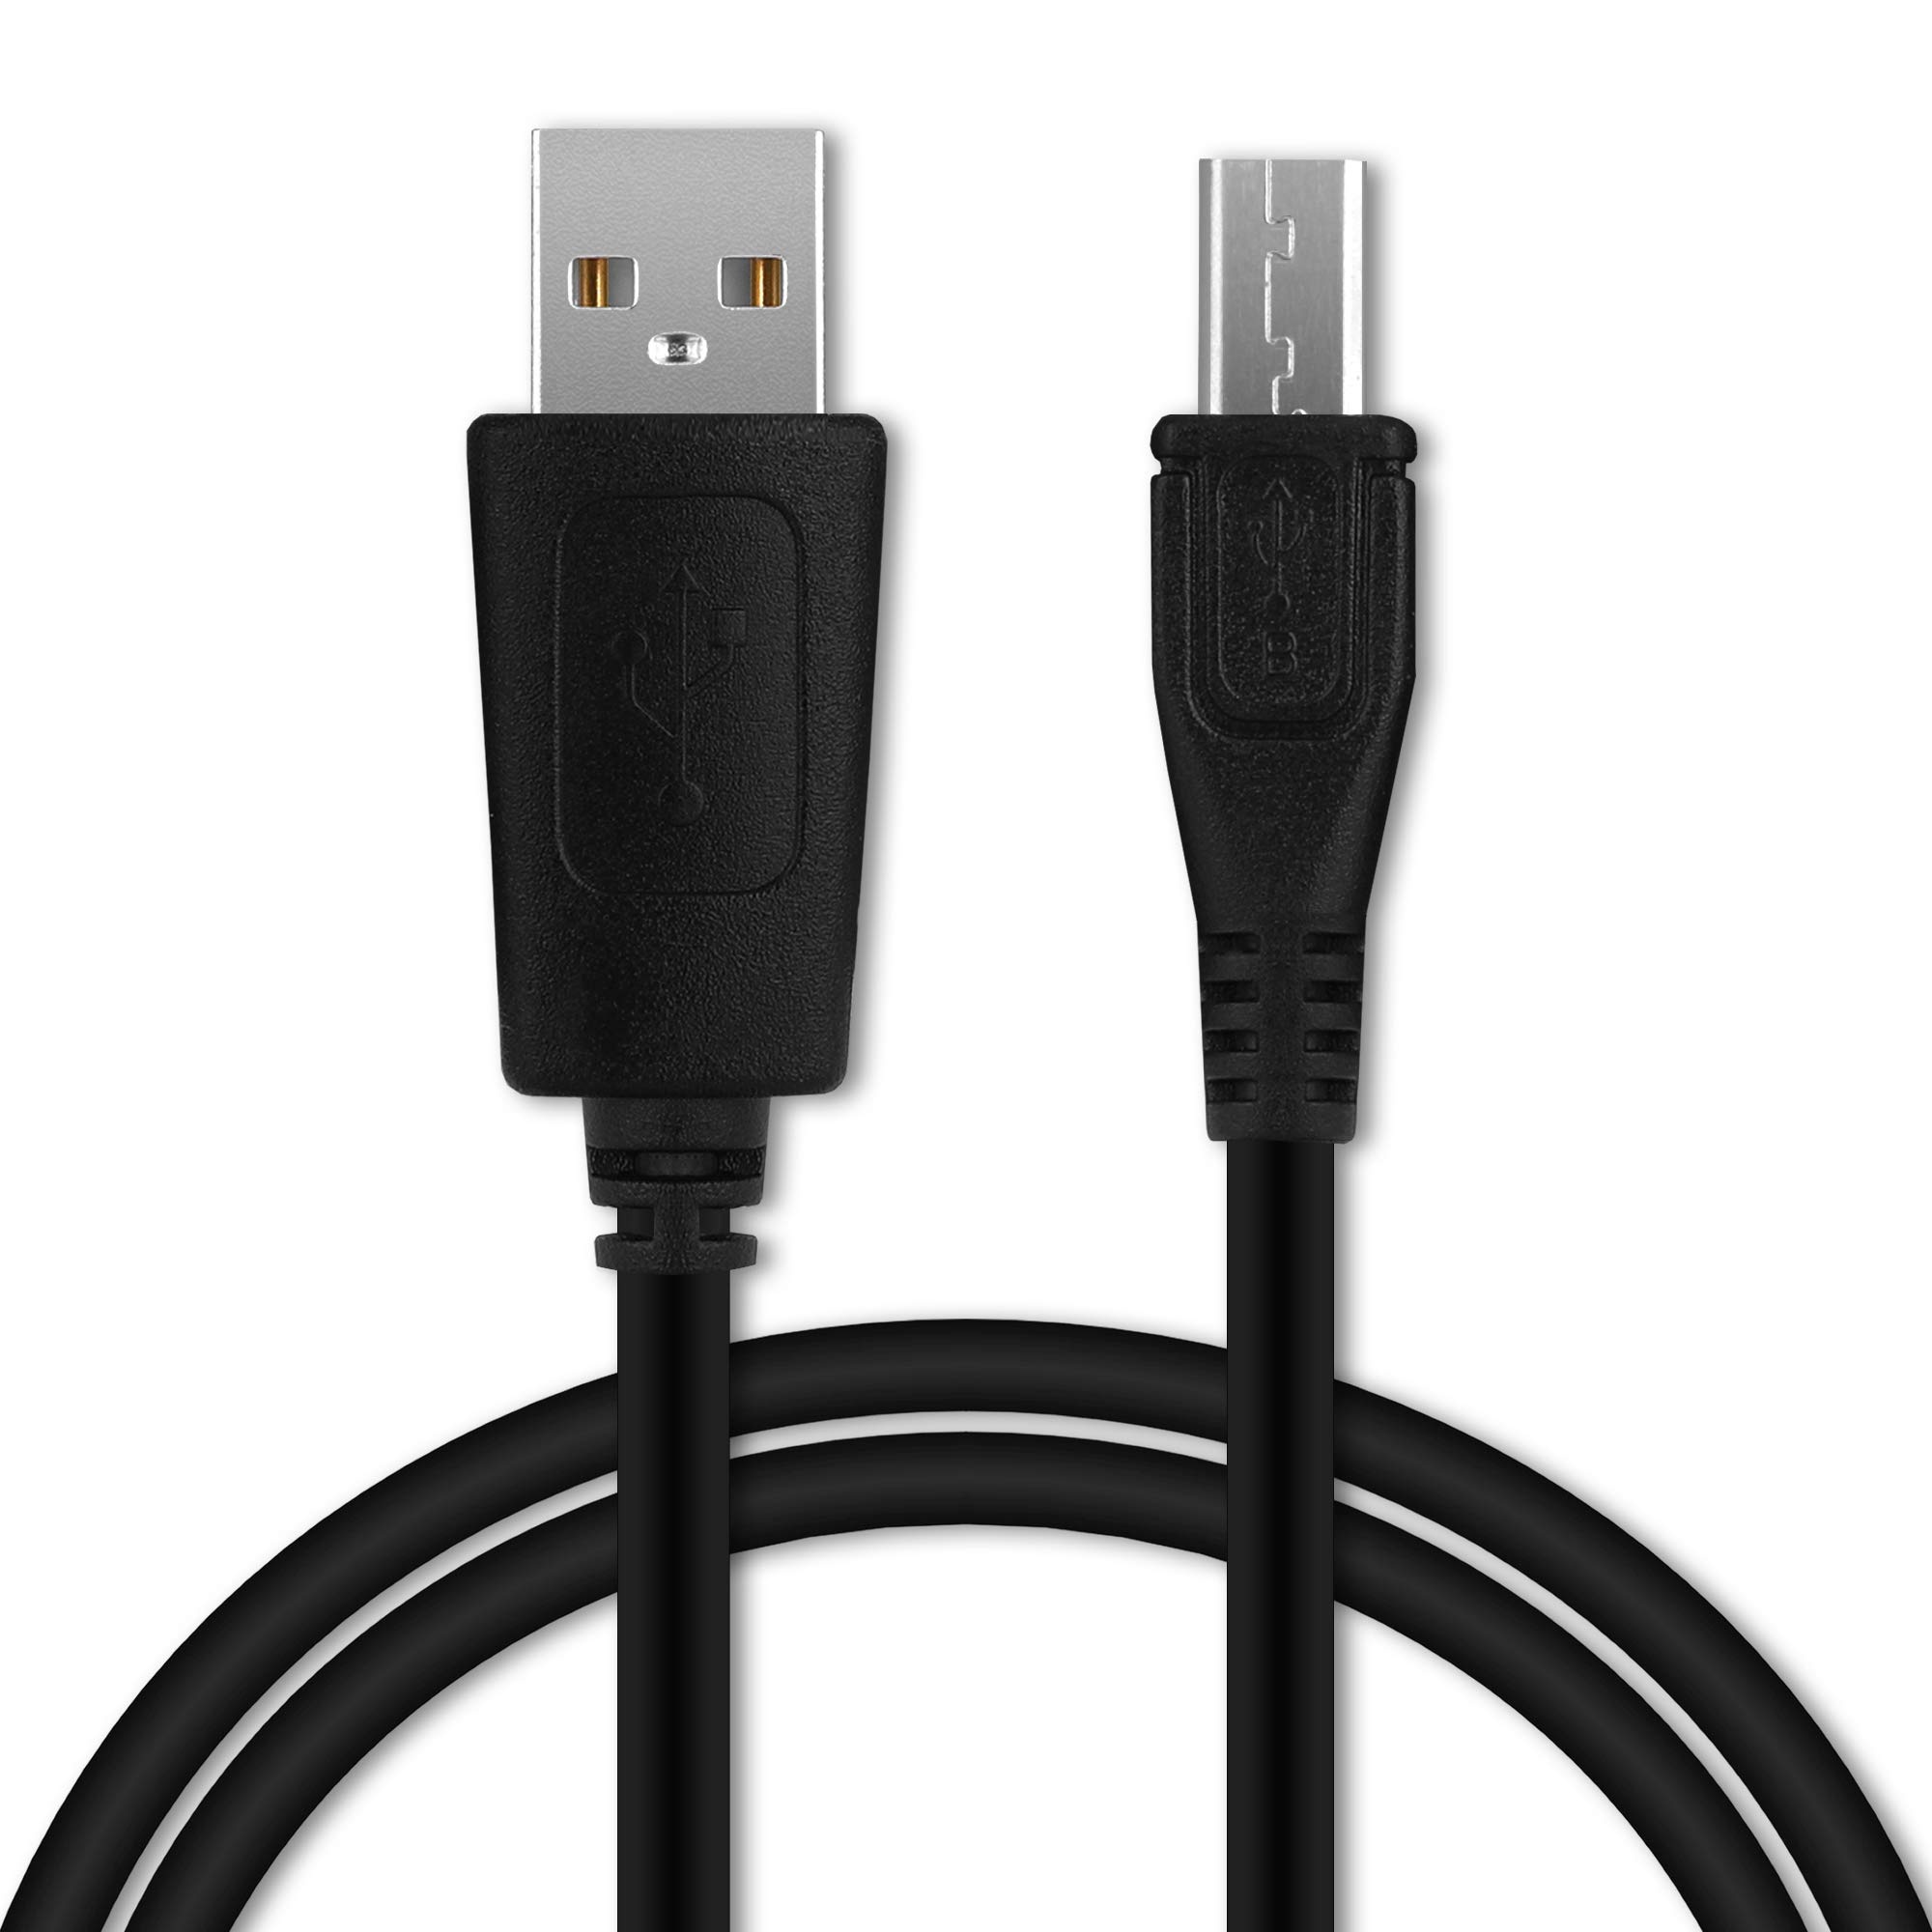 CELLONIC® USB Kabel 1m kompatibel mit RugGear RG740 / RG730 / RG700 / RG650 / RG655 / RG600 / RG500 / RG310 / RG100 Smartphone, Handy Ladekabel Micro USB auf USB A 2.0 Datenkabel 1A schwarz PVC